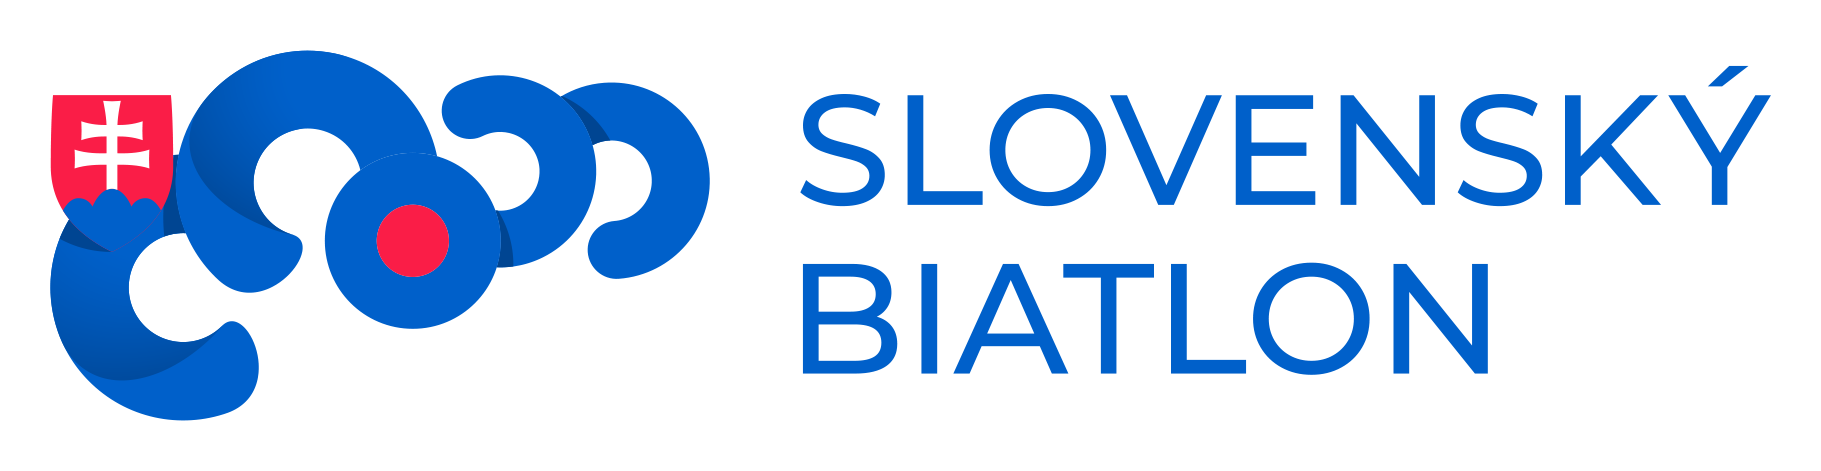 biatlon logo blue vertical plus znak svk 